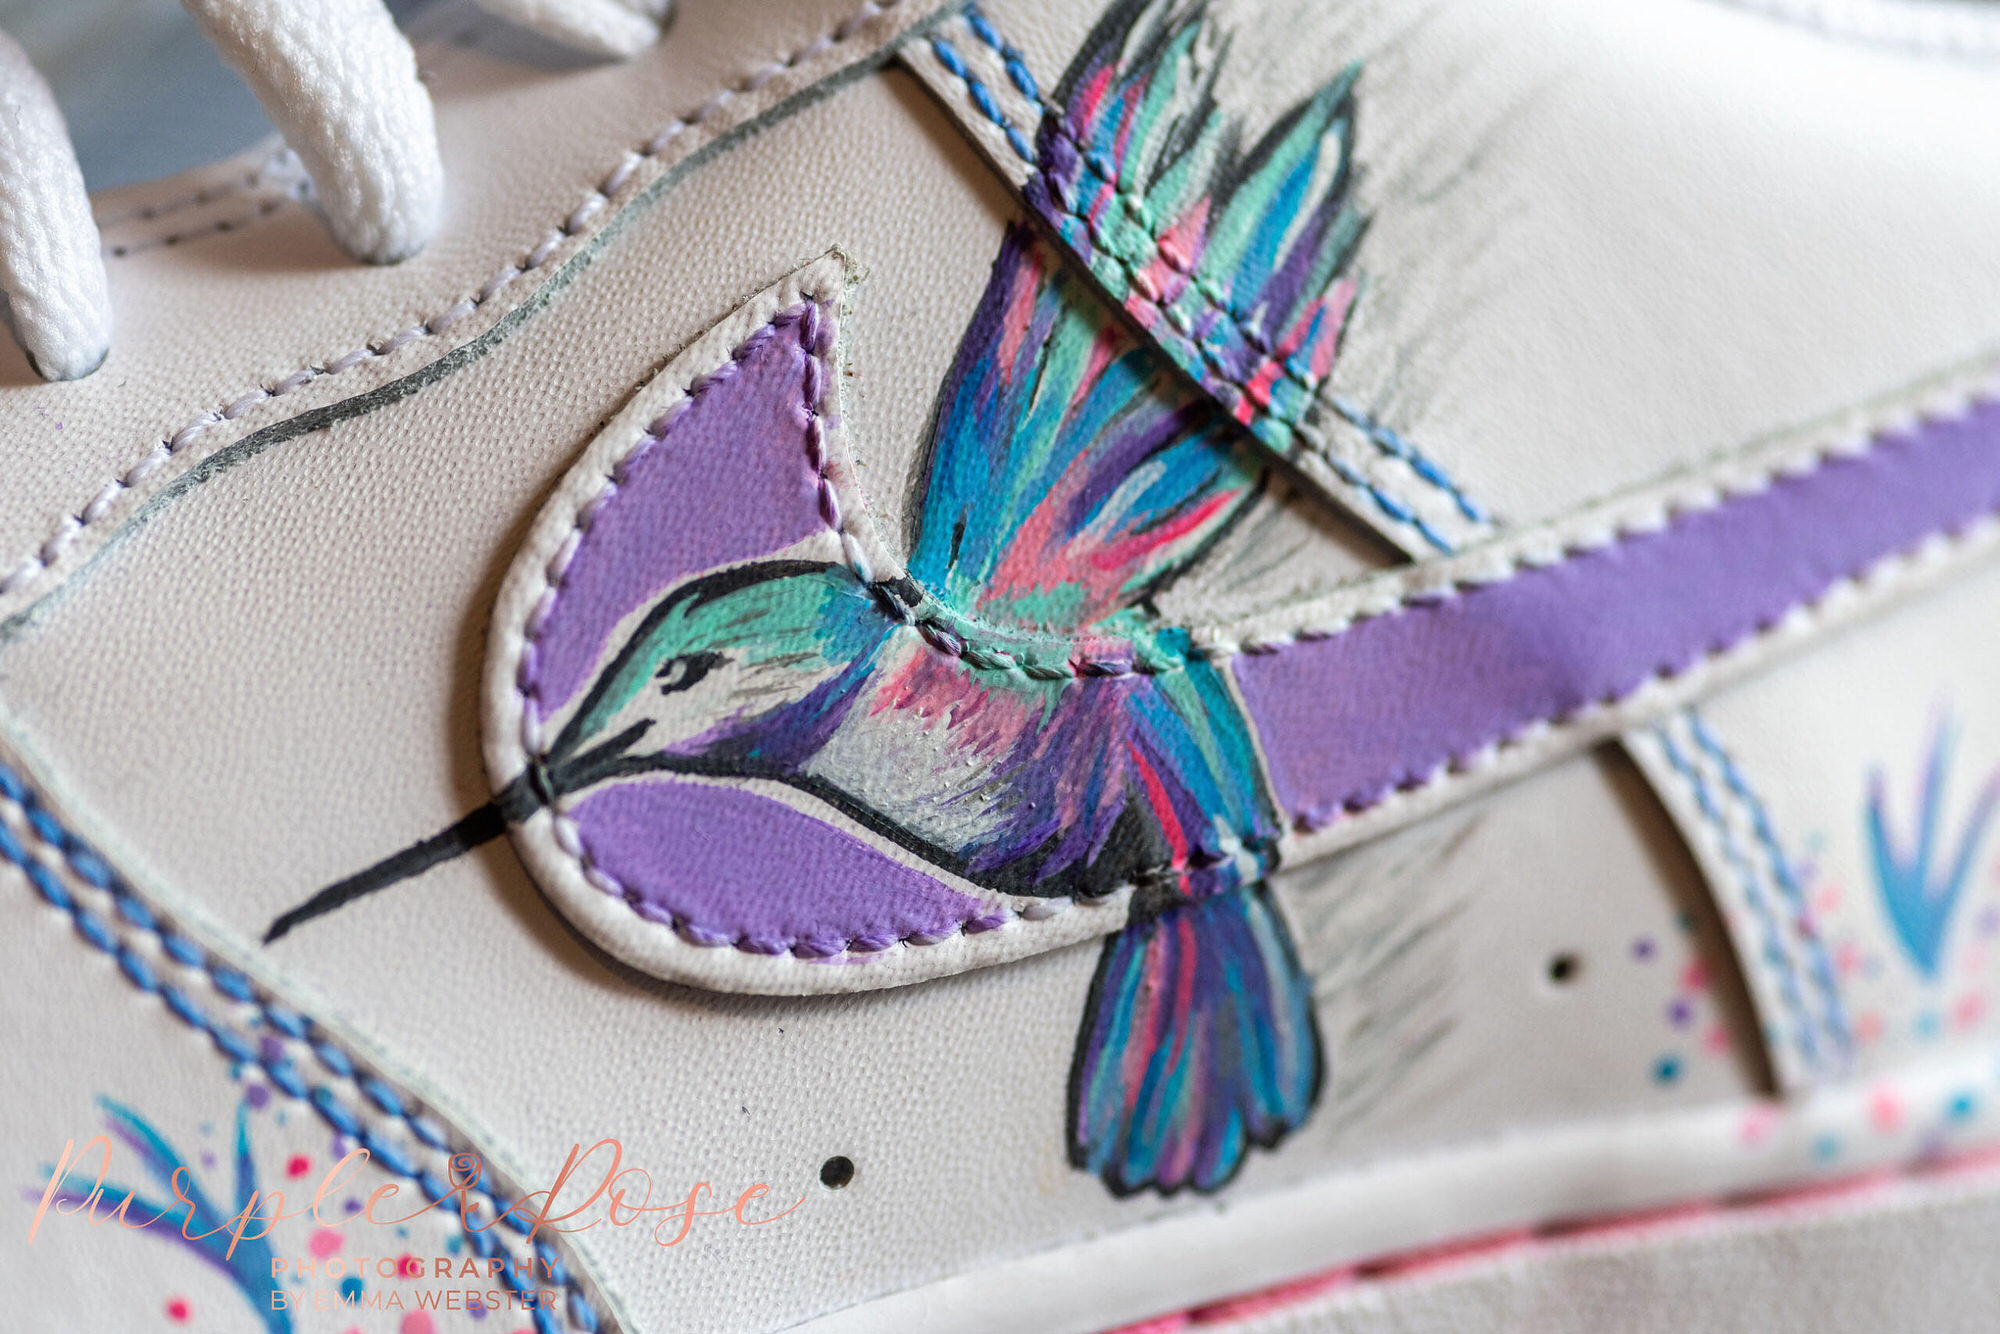 Humming bird on brides shoe